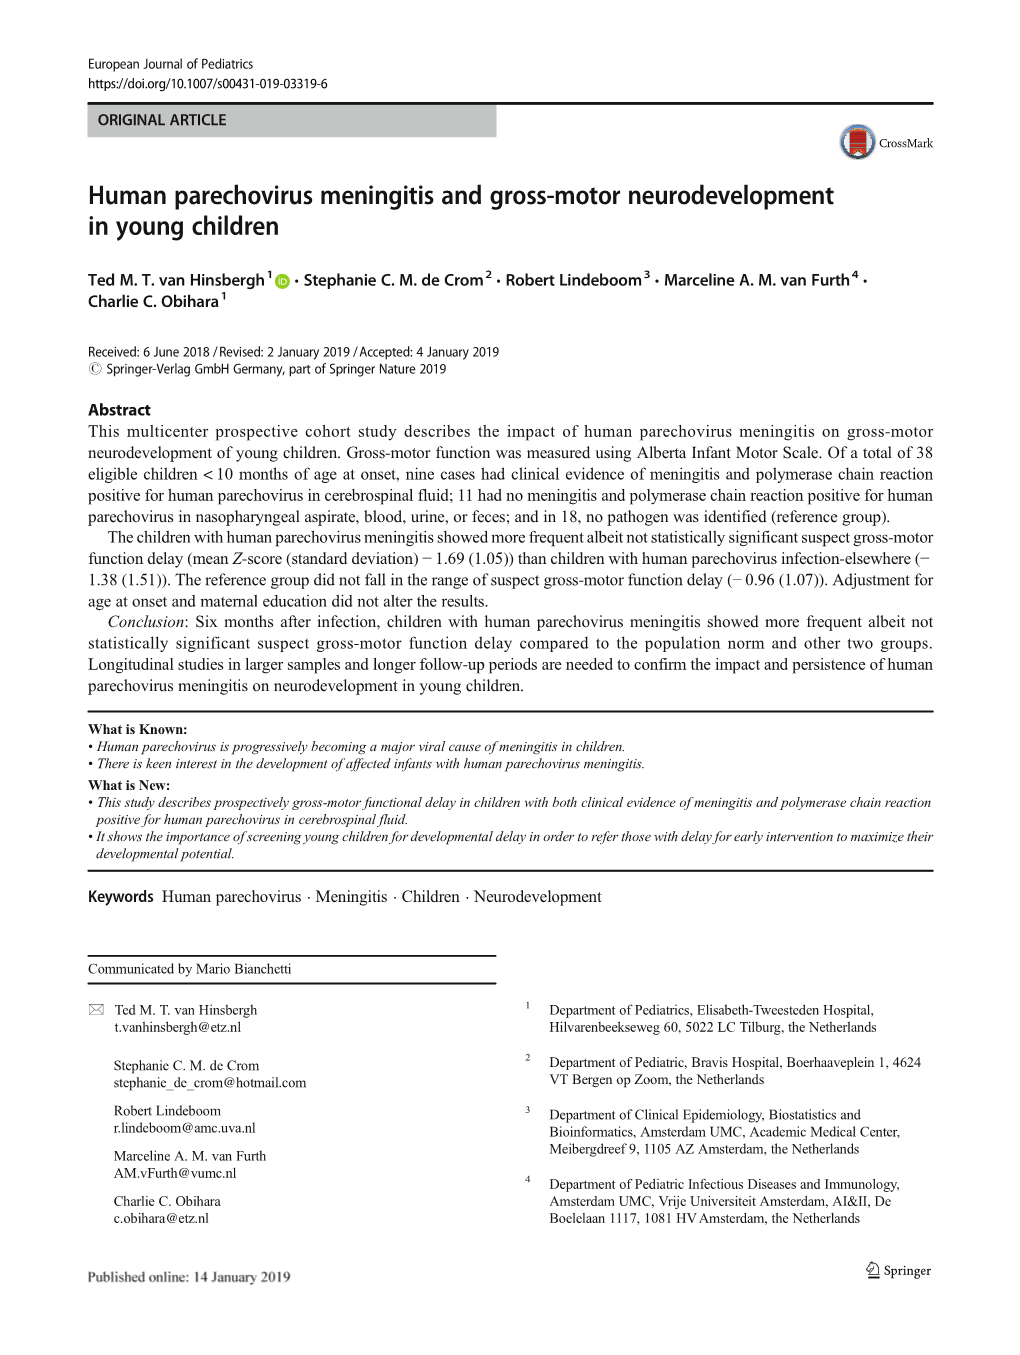 Human Parechovirus Meningitis and Gross-Motor Neurodevelopment in Young Children